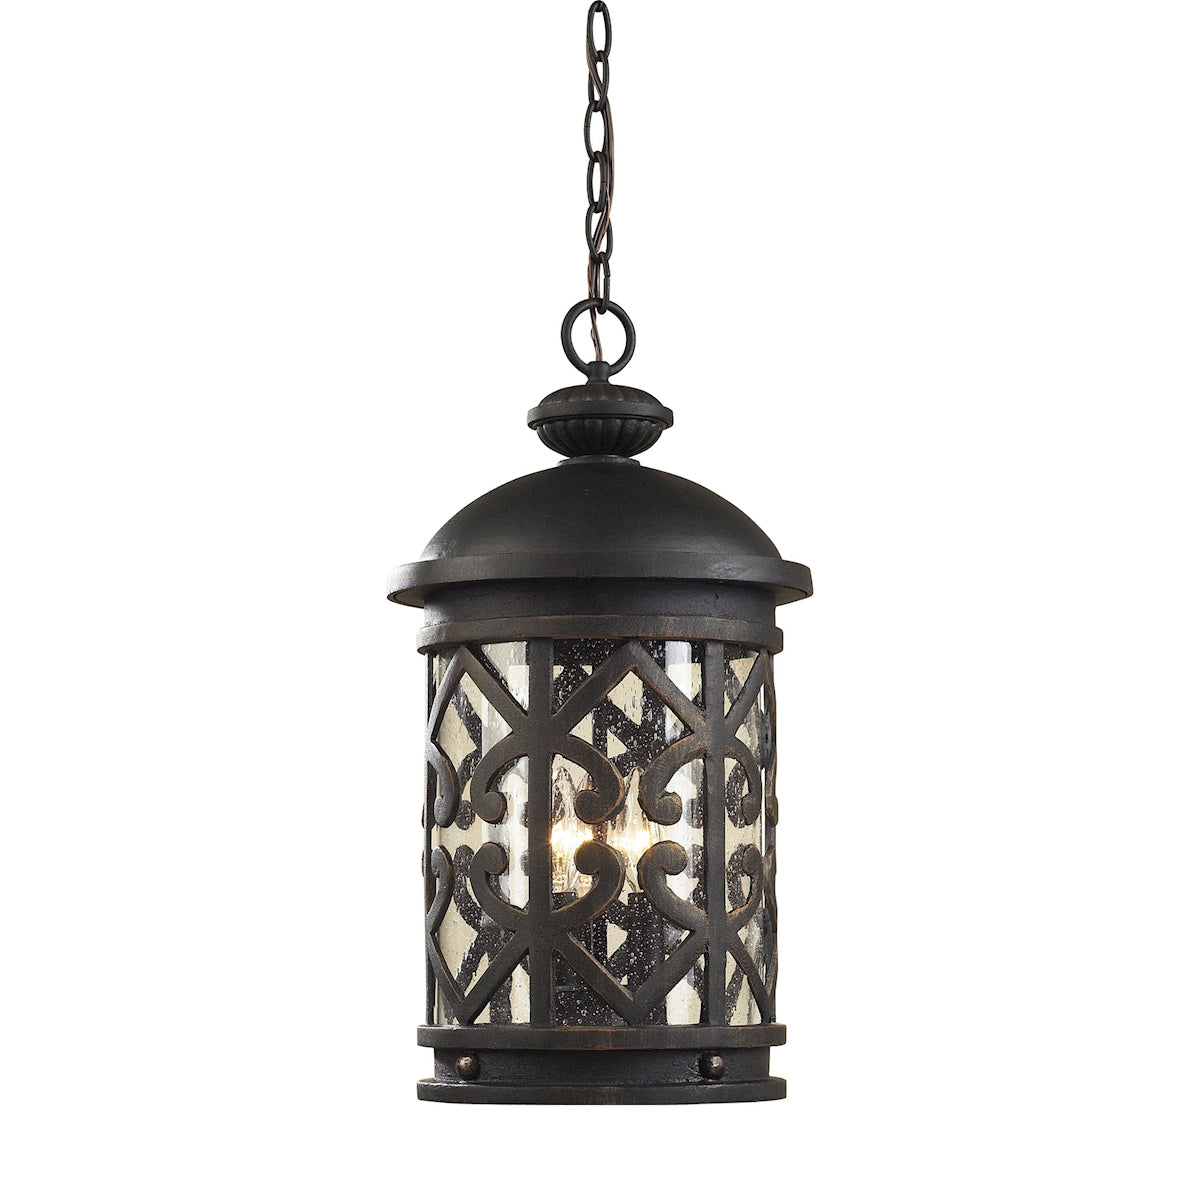 ELK Lighting 42063/3 Tuscany Coast 3-Light Outdoor Hanging Lantern in Weathered Charcoal